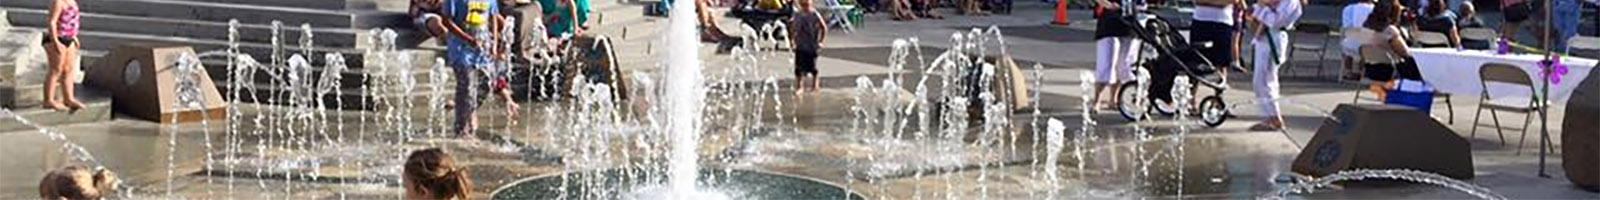 Hillsboro City Center Fountains